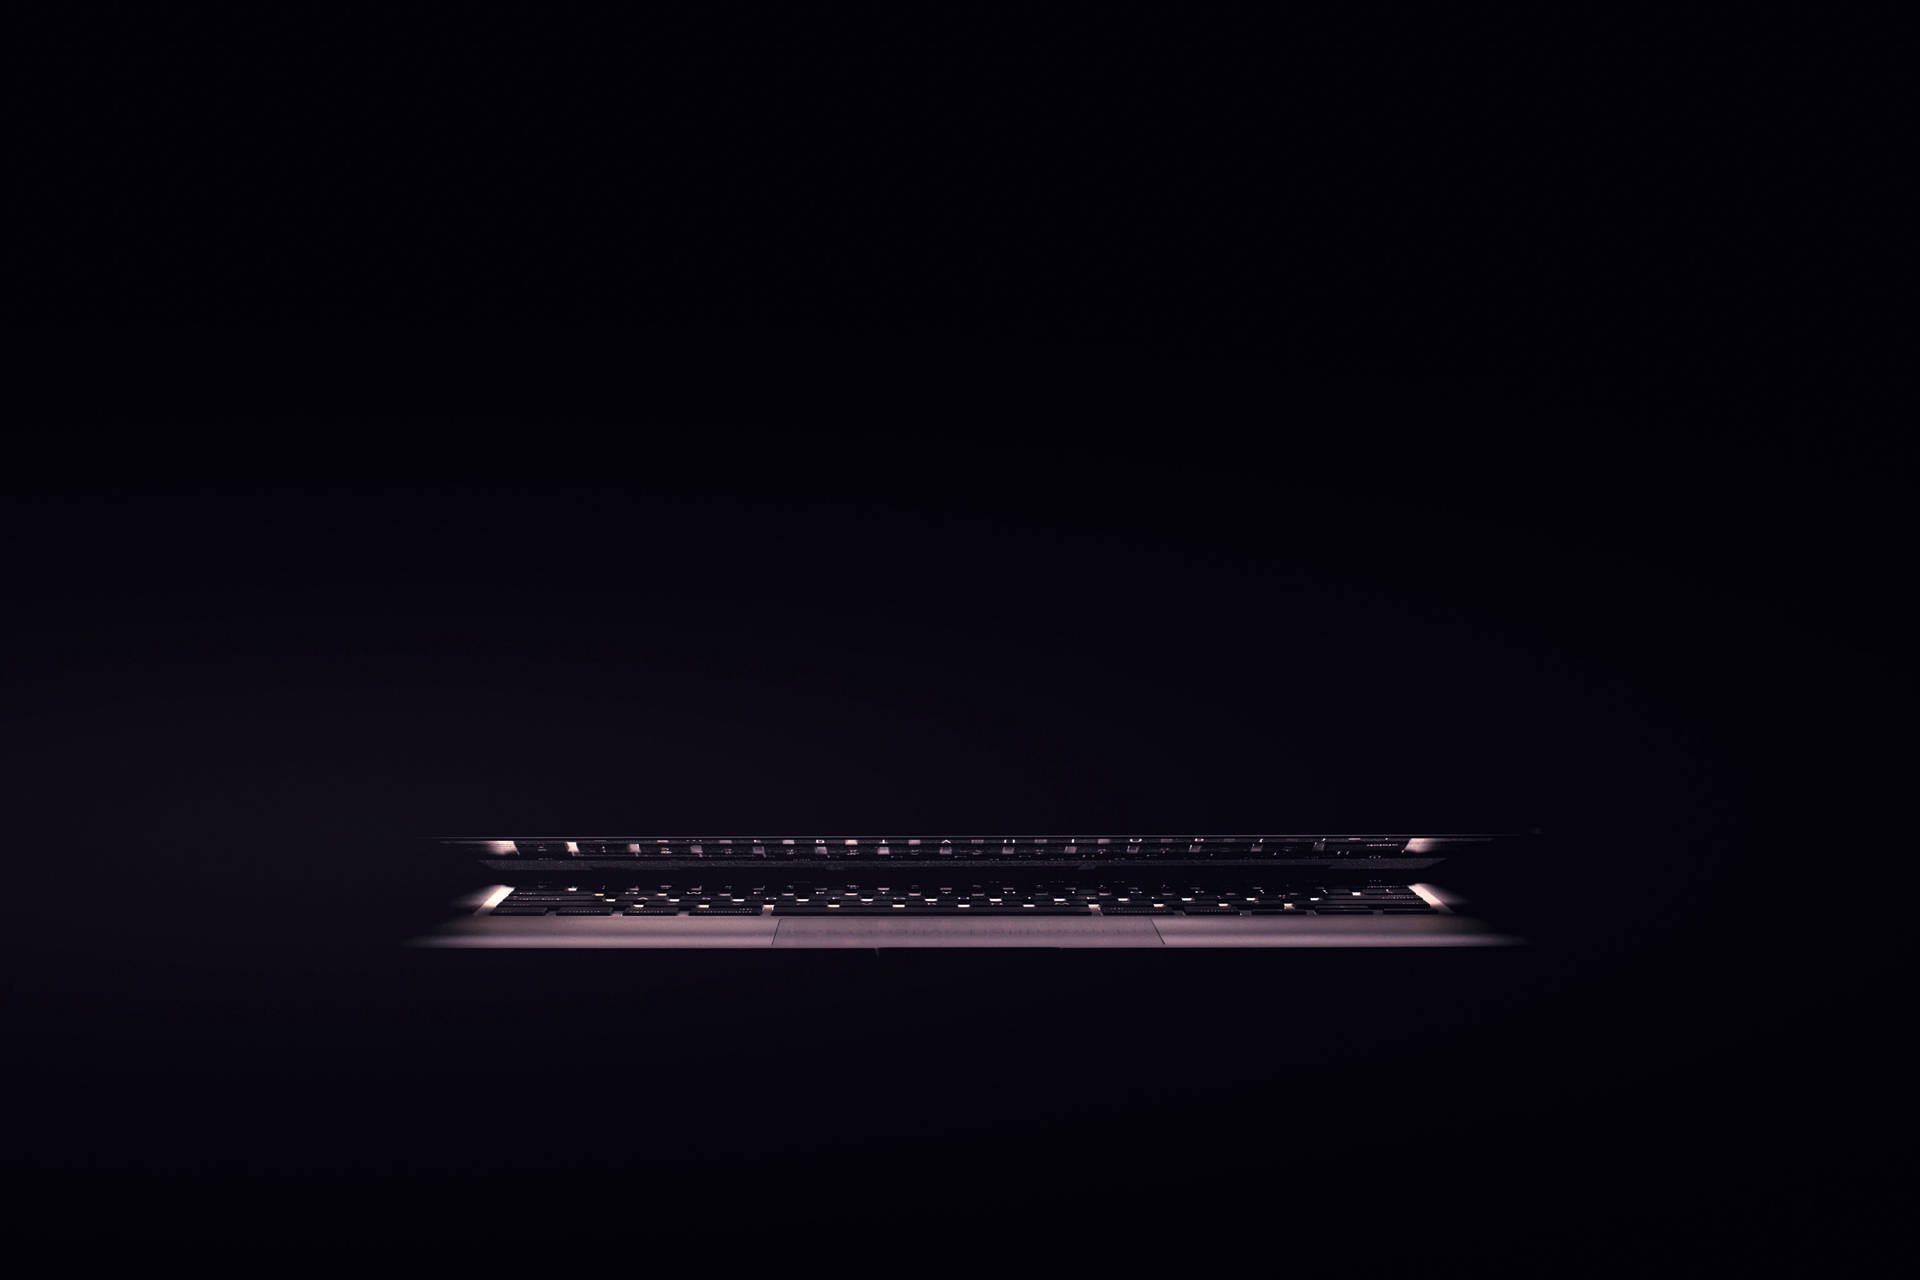 Dark Laptop Keyboard With Lights